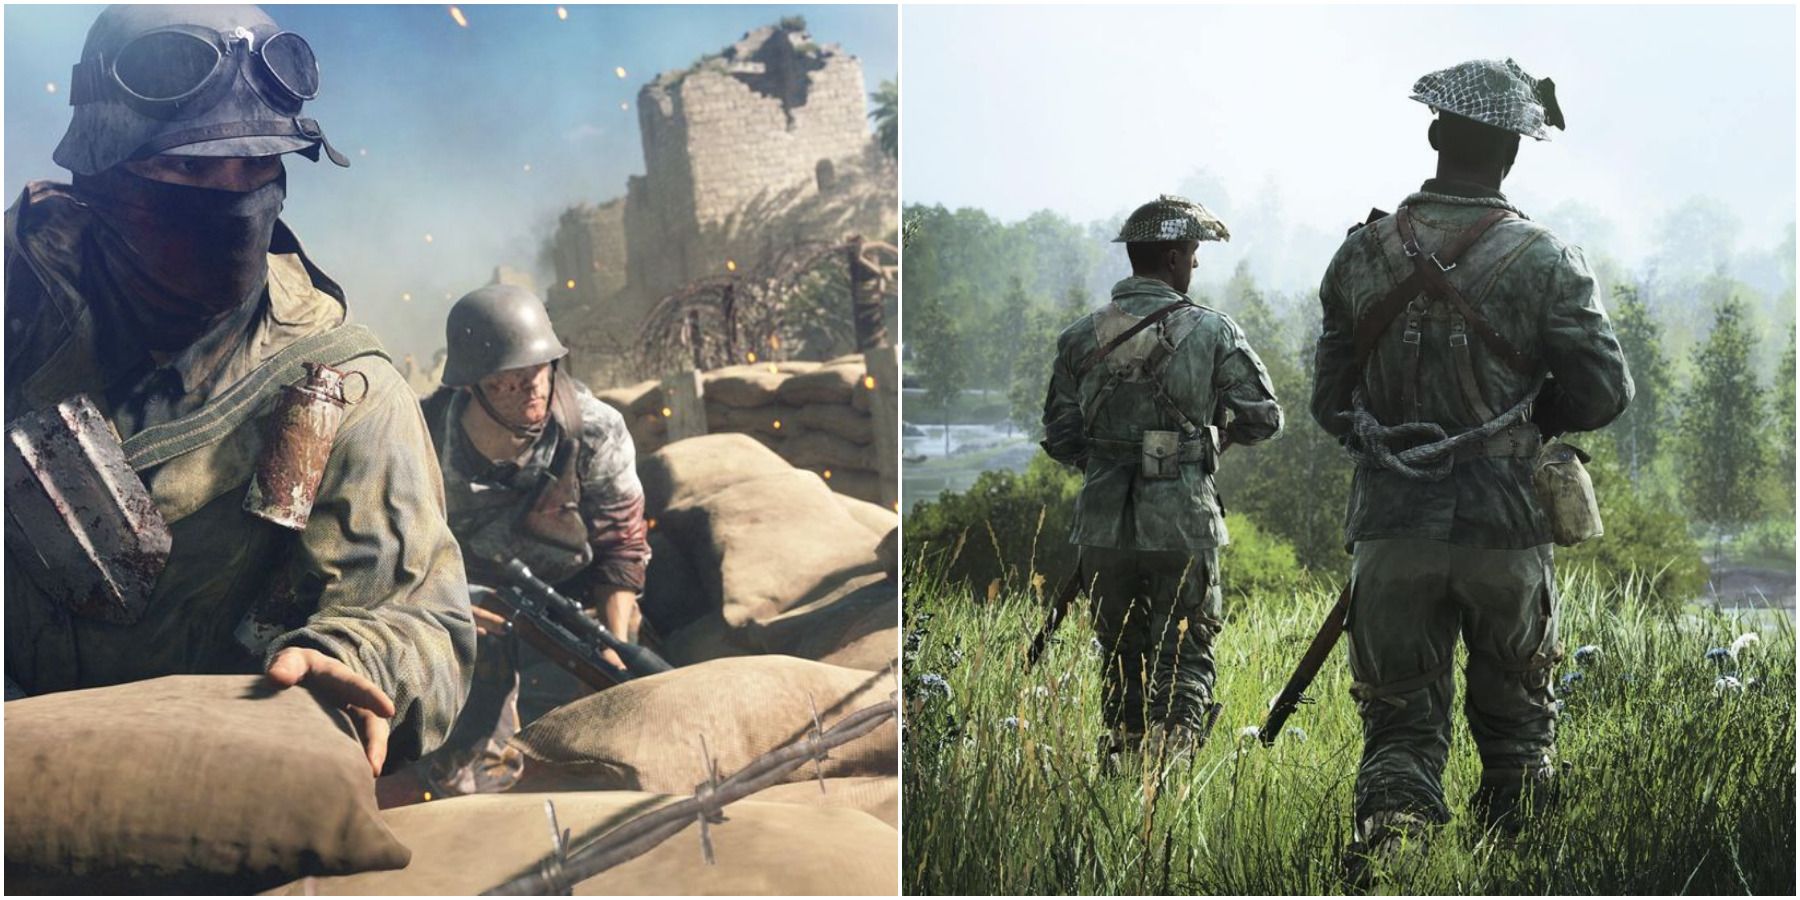 Battlefield 5' hops on the battle royale bandwagon